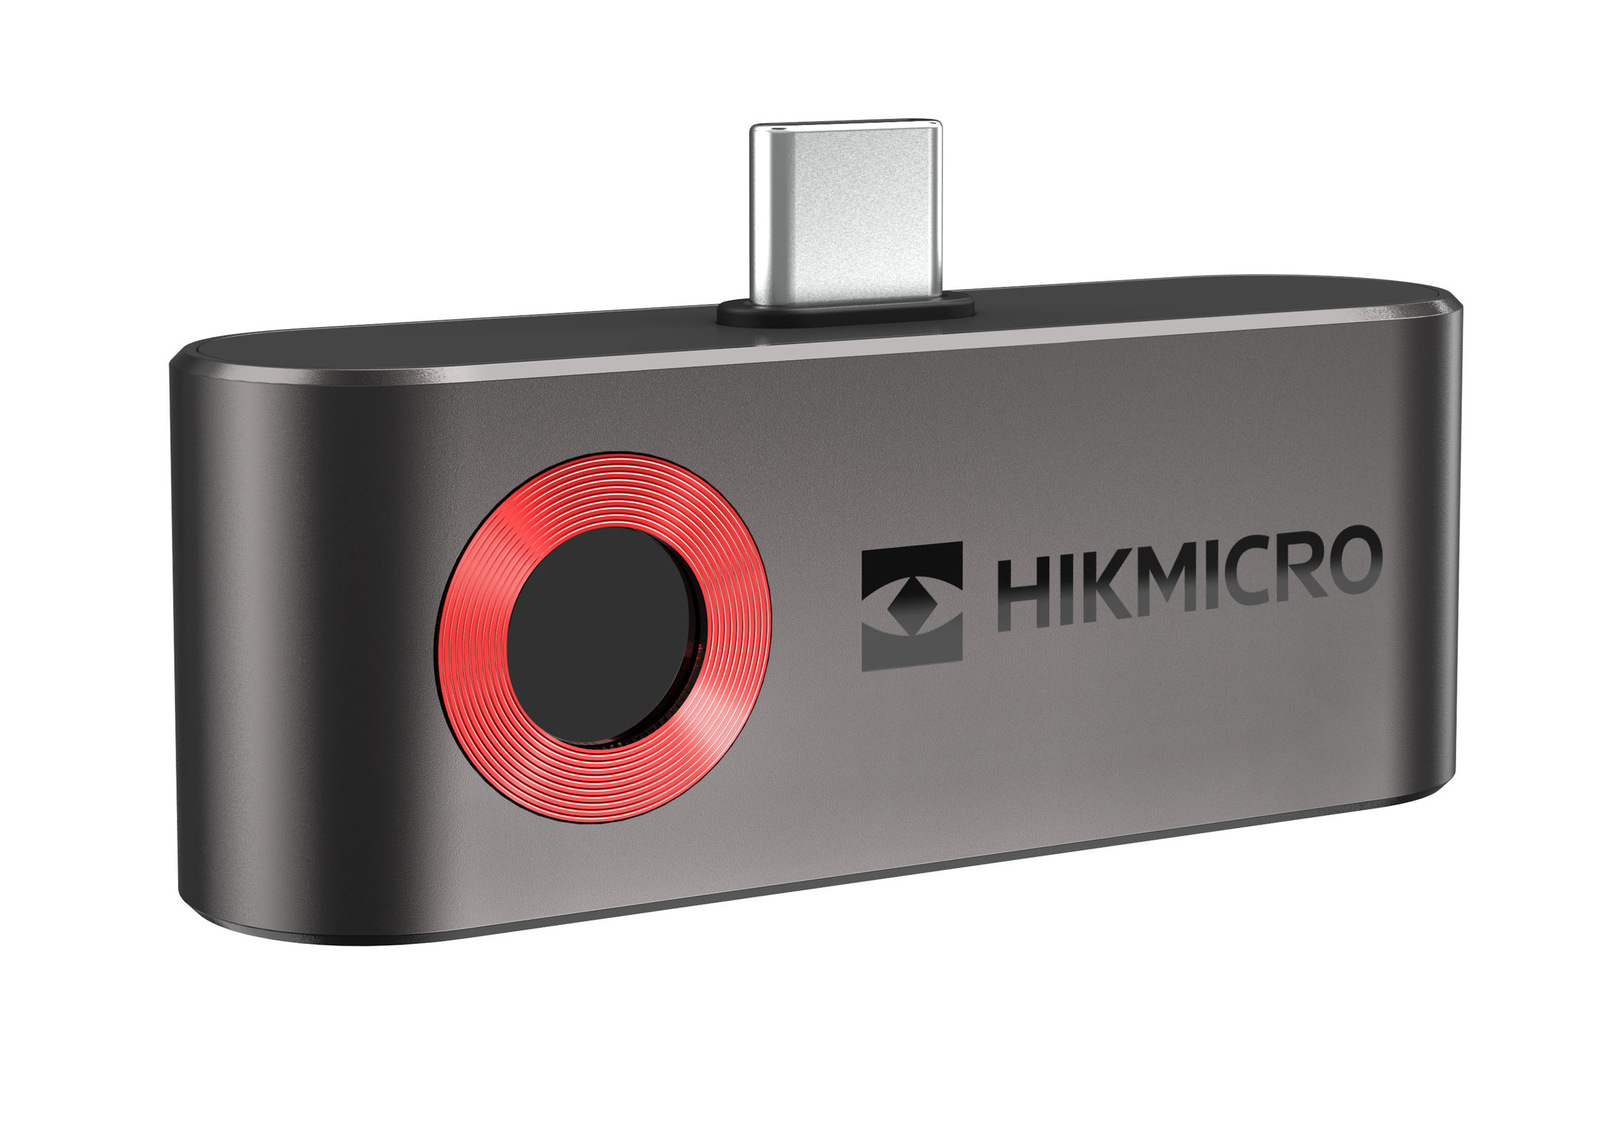 Hikmicro: Kameramodu﻿l für Wärmebilder mit Smartphones